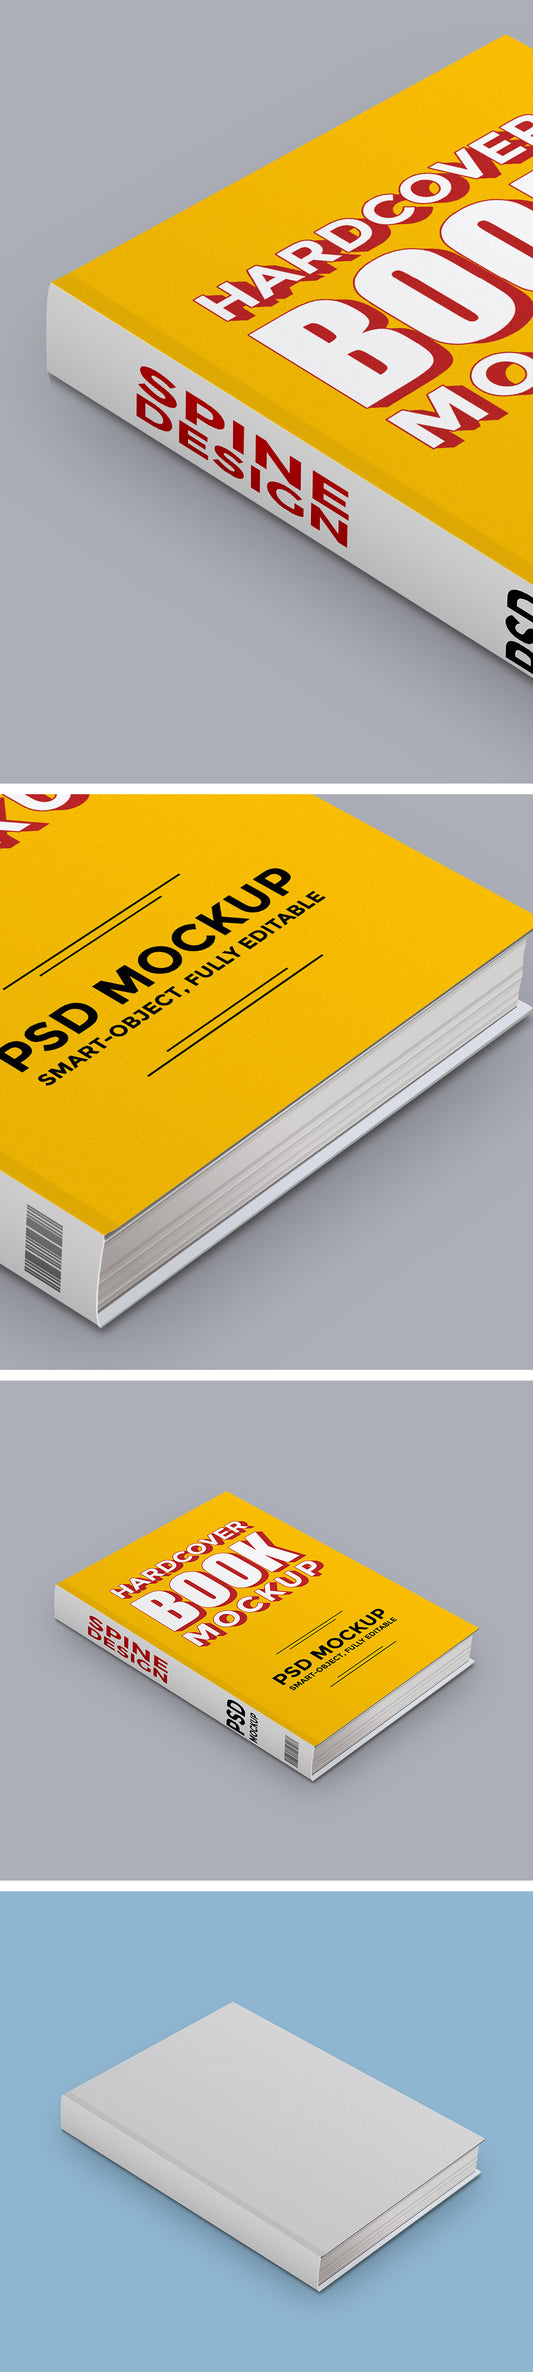 Free Hardcover Book PSD Mockup